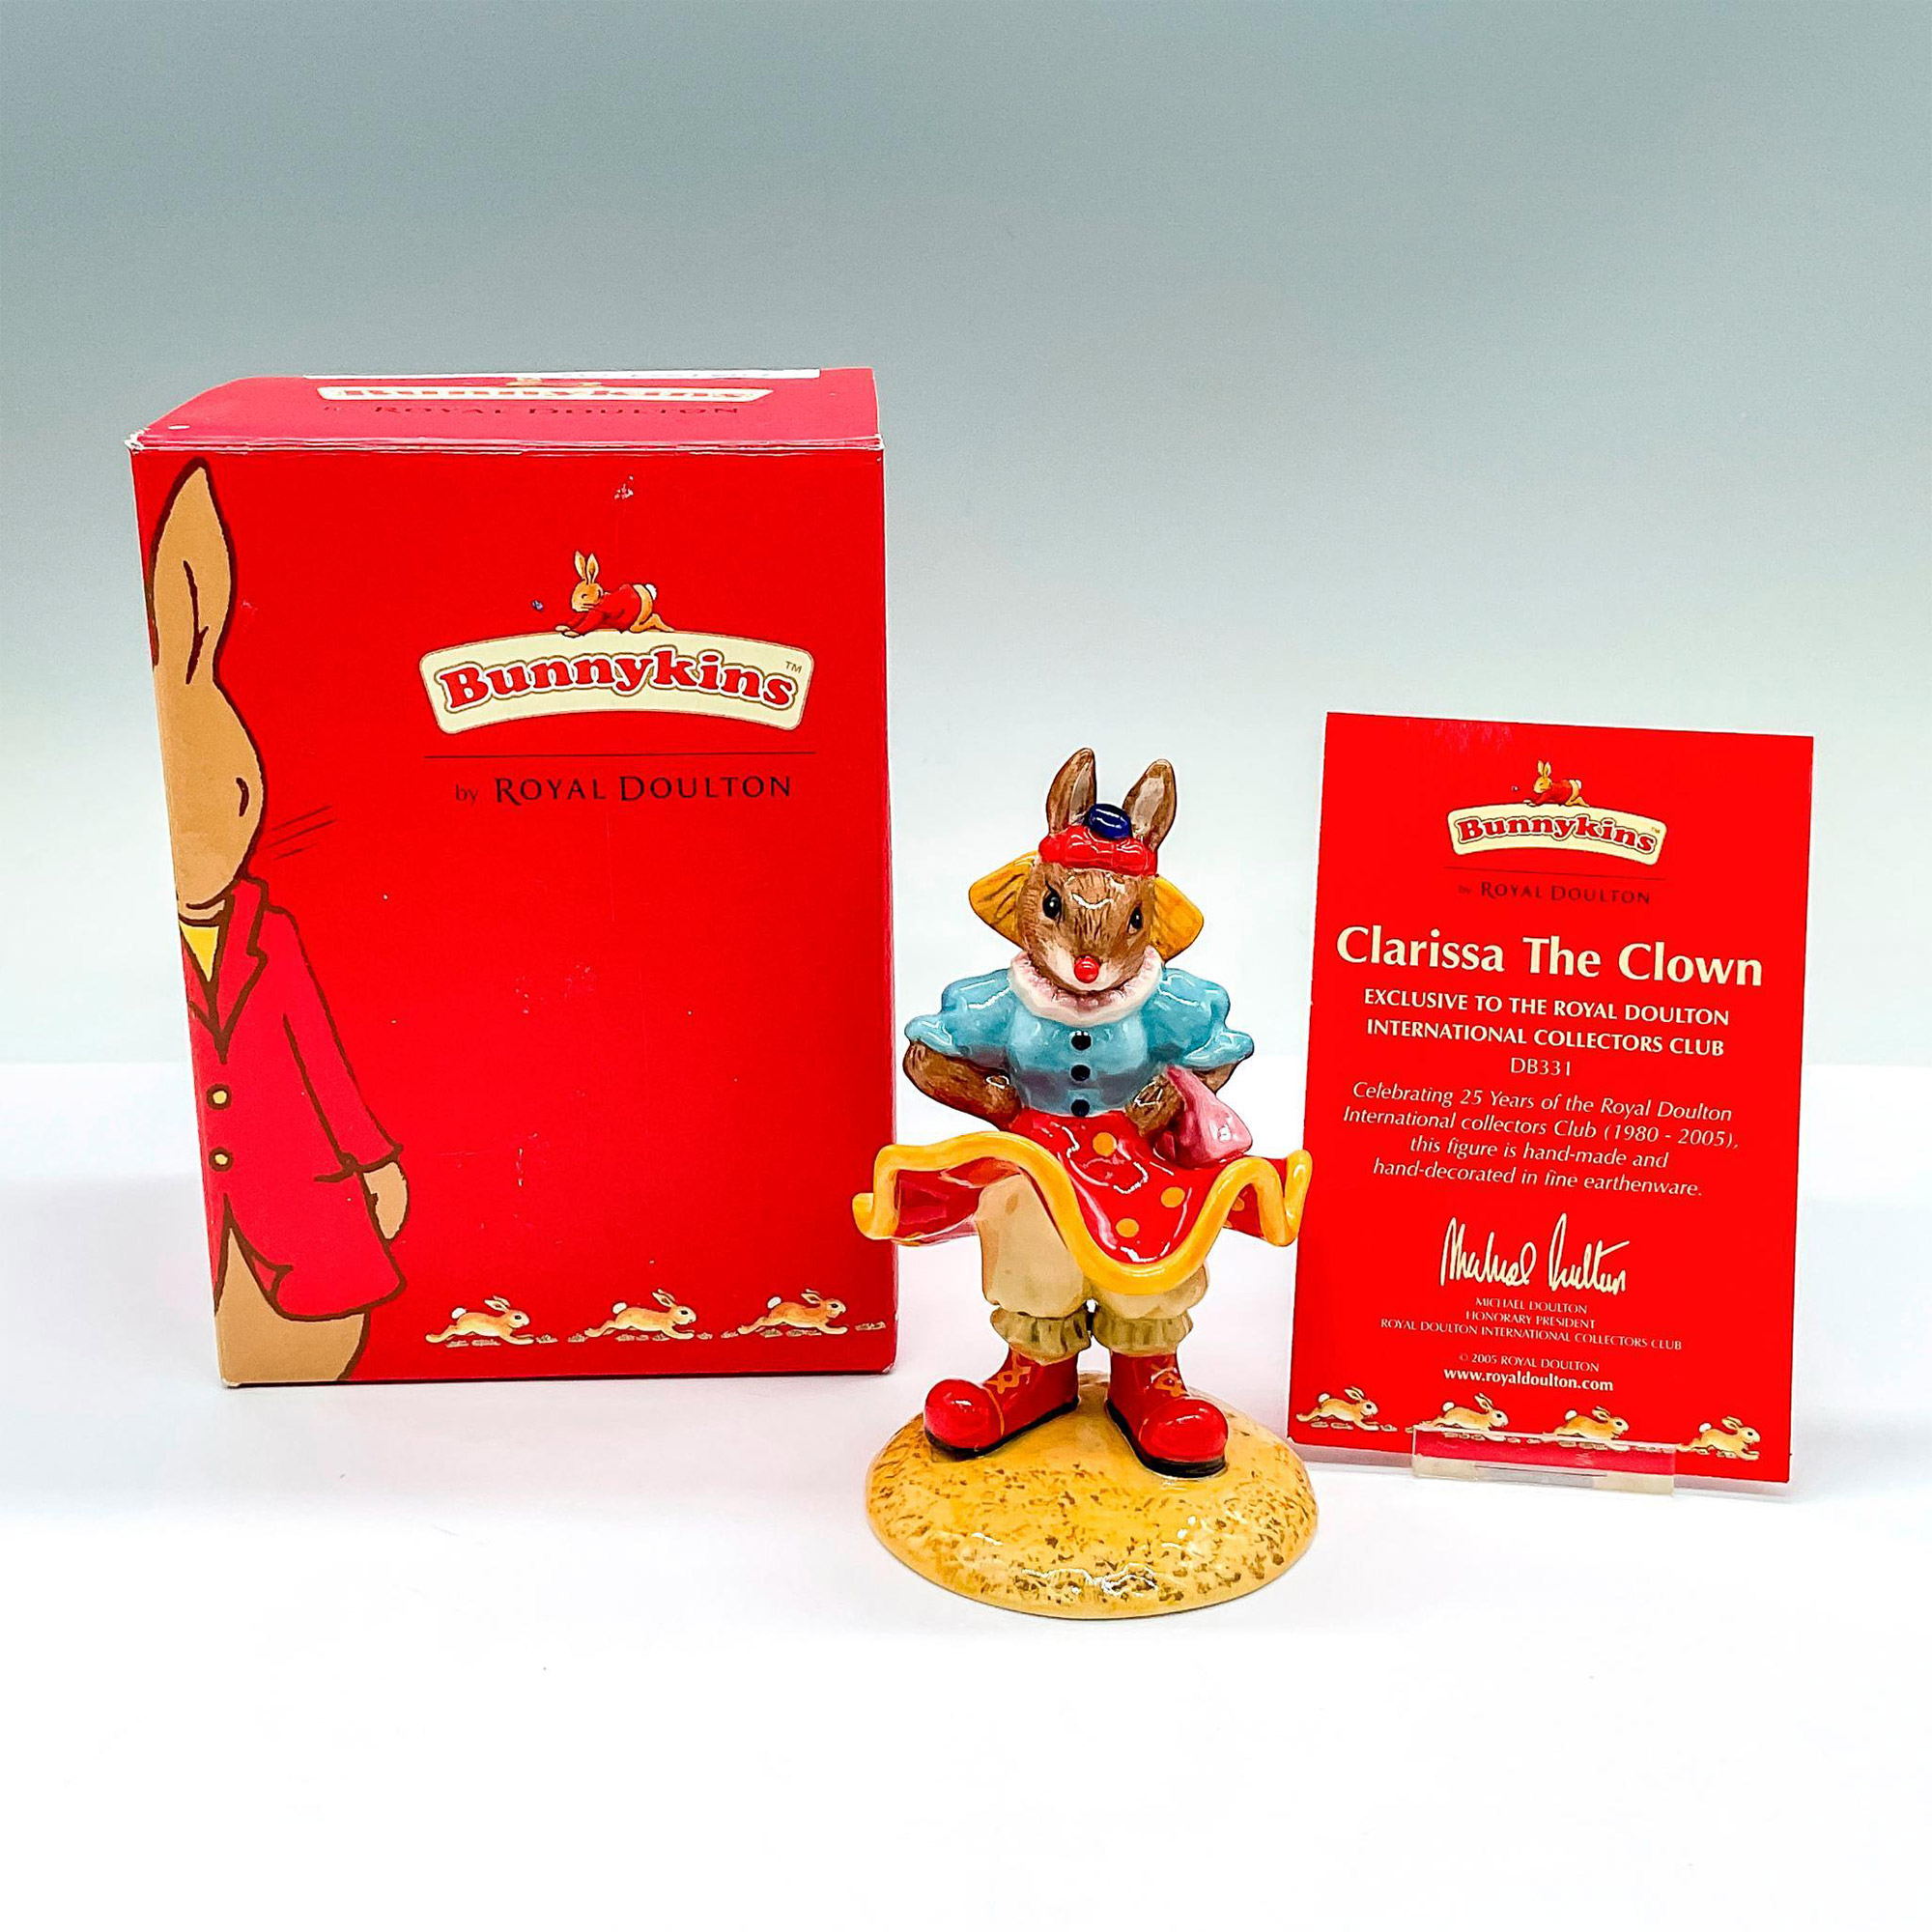 Royal Doulton Bunnykins Figurine, Clarissa The Clown DB331 - Image 2 of 4